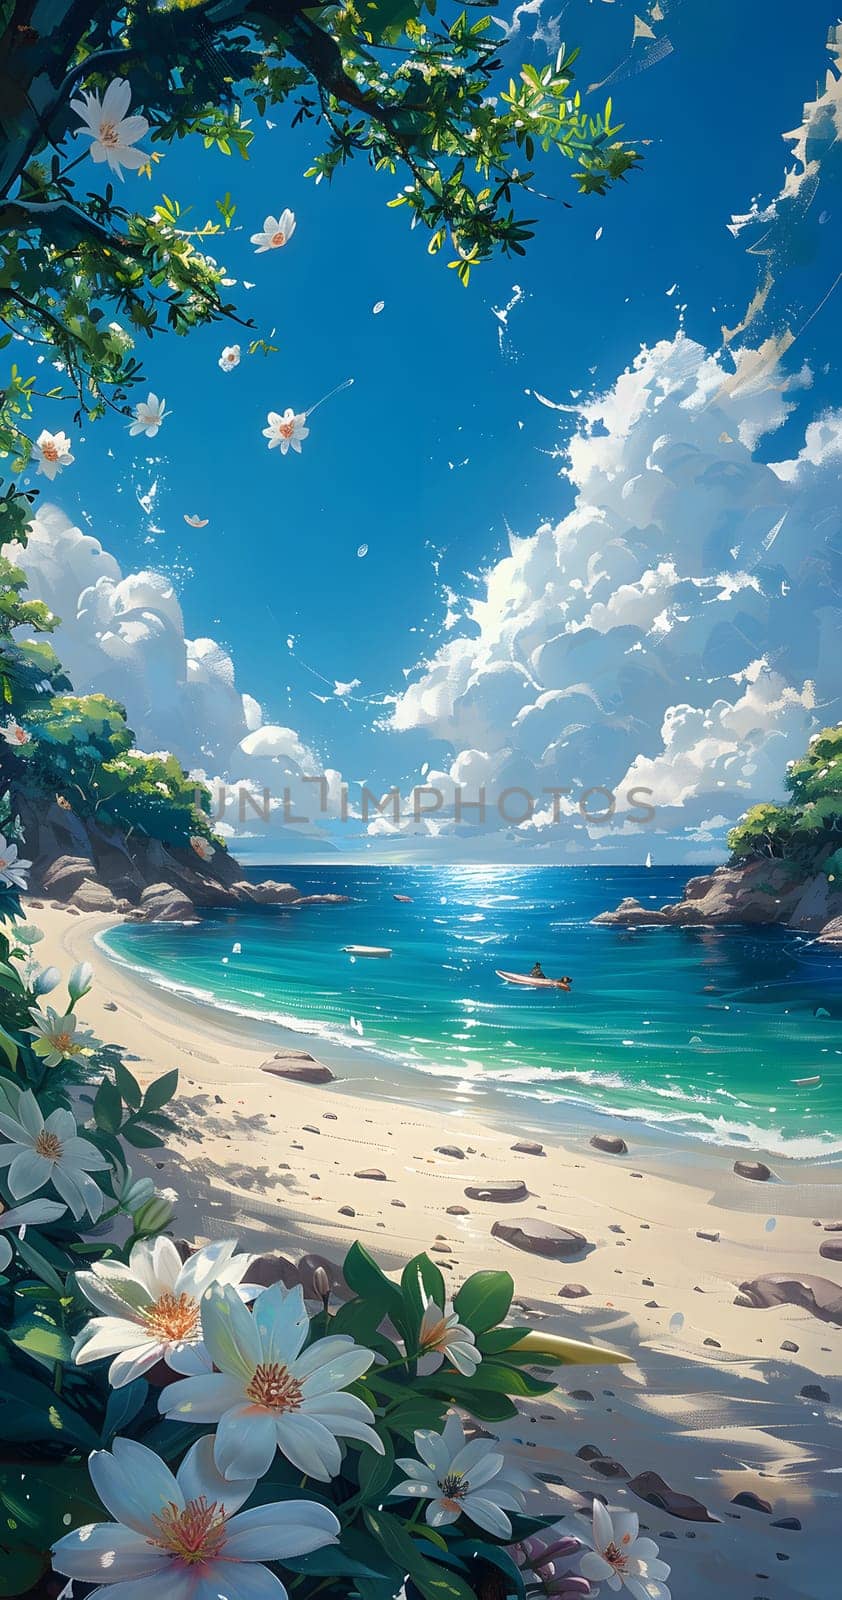 Azure sky, Aqua water, flowers on beach, a tranquil coastal scene by Nadtochiy